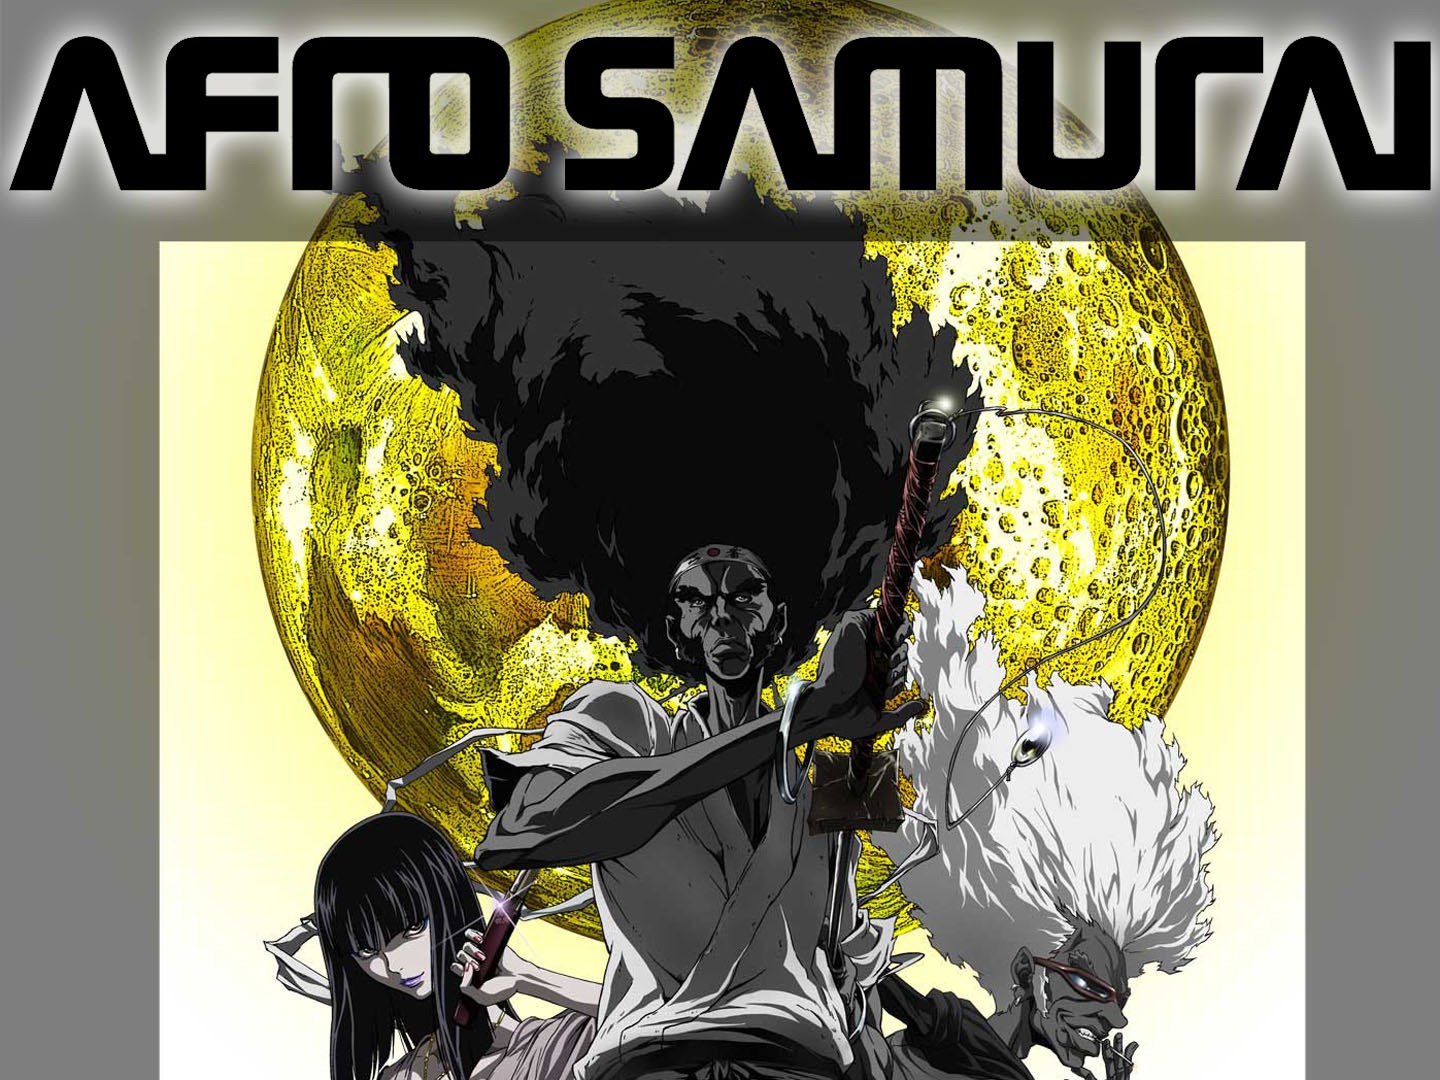 Afro Samurai Resurrection [Afuro Zamurai - Yomigaeri] - reviews 